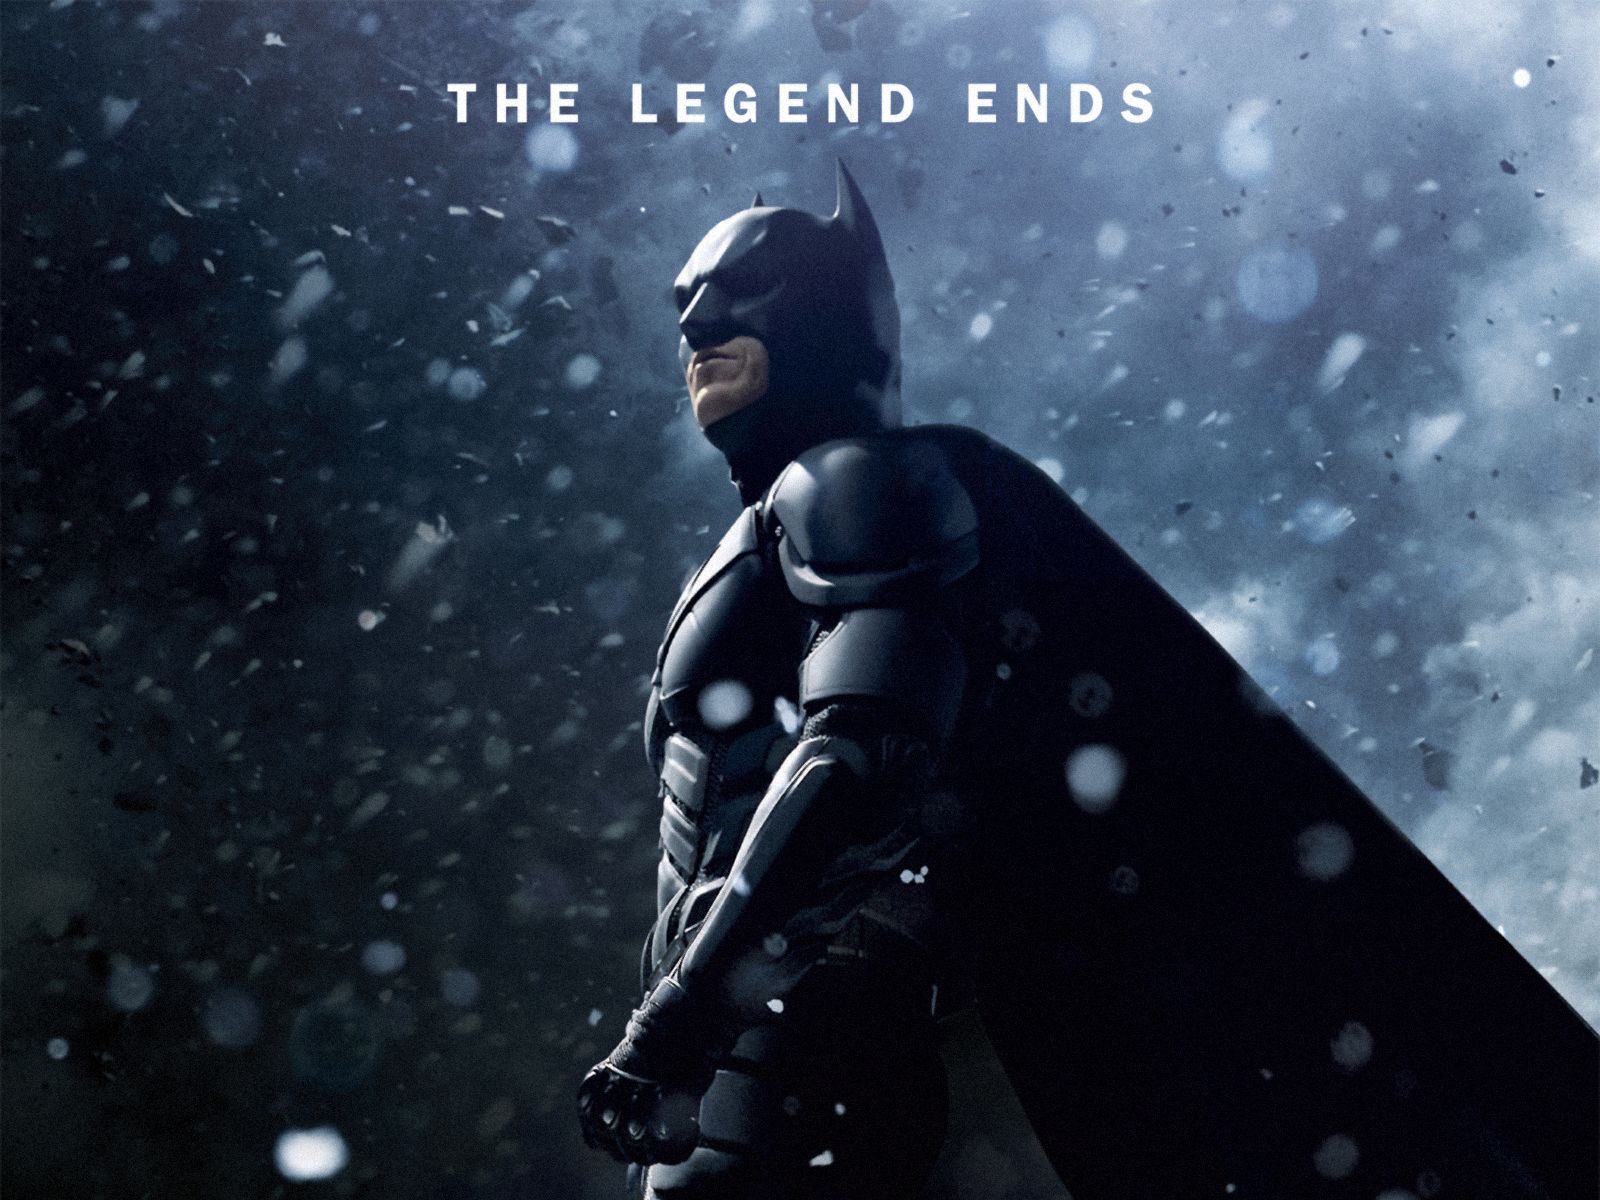 The Dark Knight Rises: Batman desktop PC and Mac wallpaper